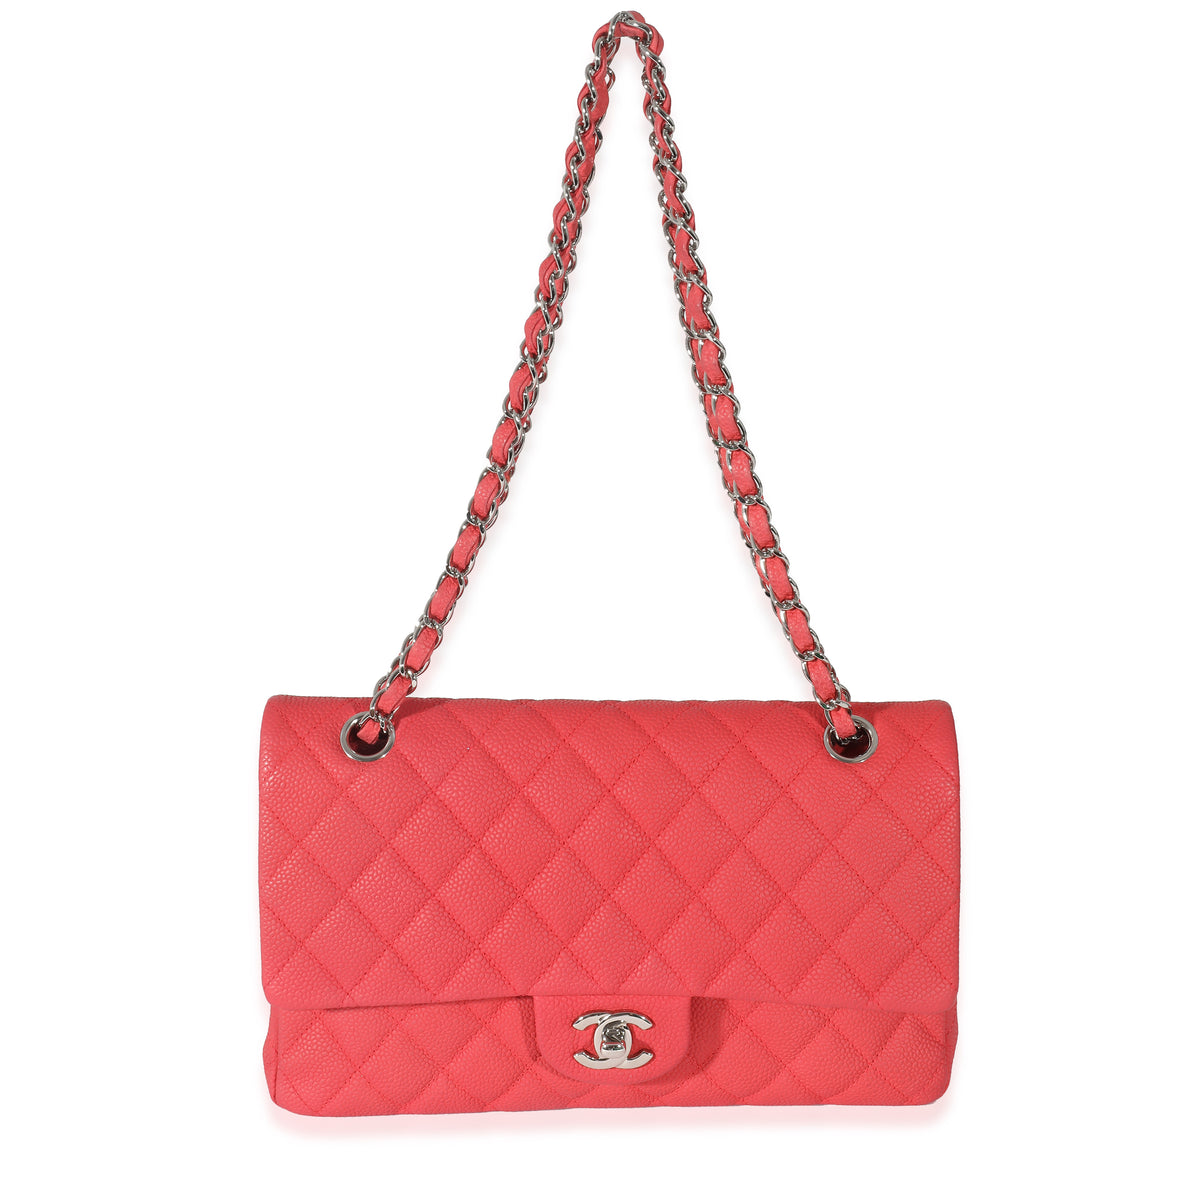 Chanel Red Caviar Medium Classic Double Flap Bag